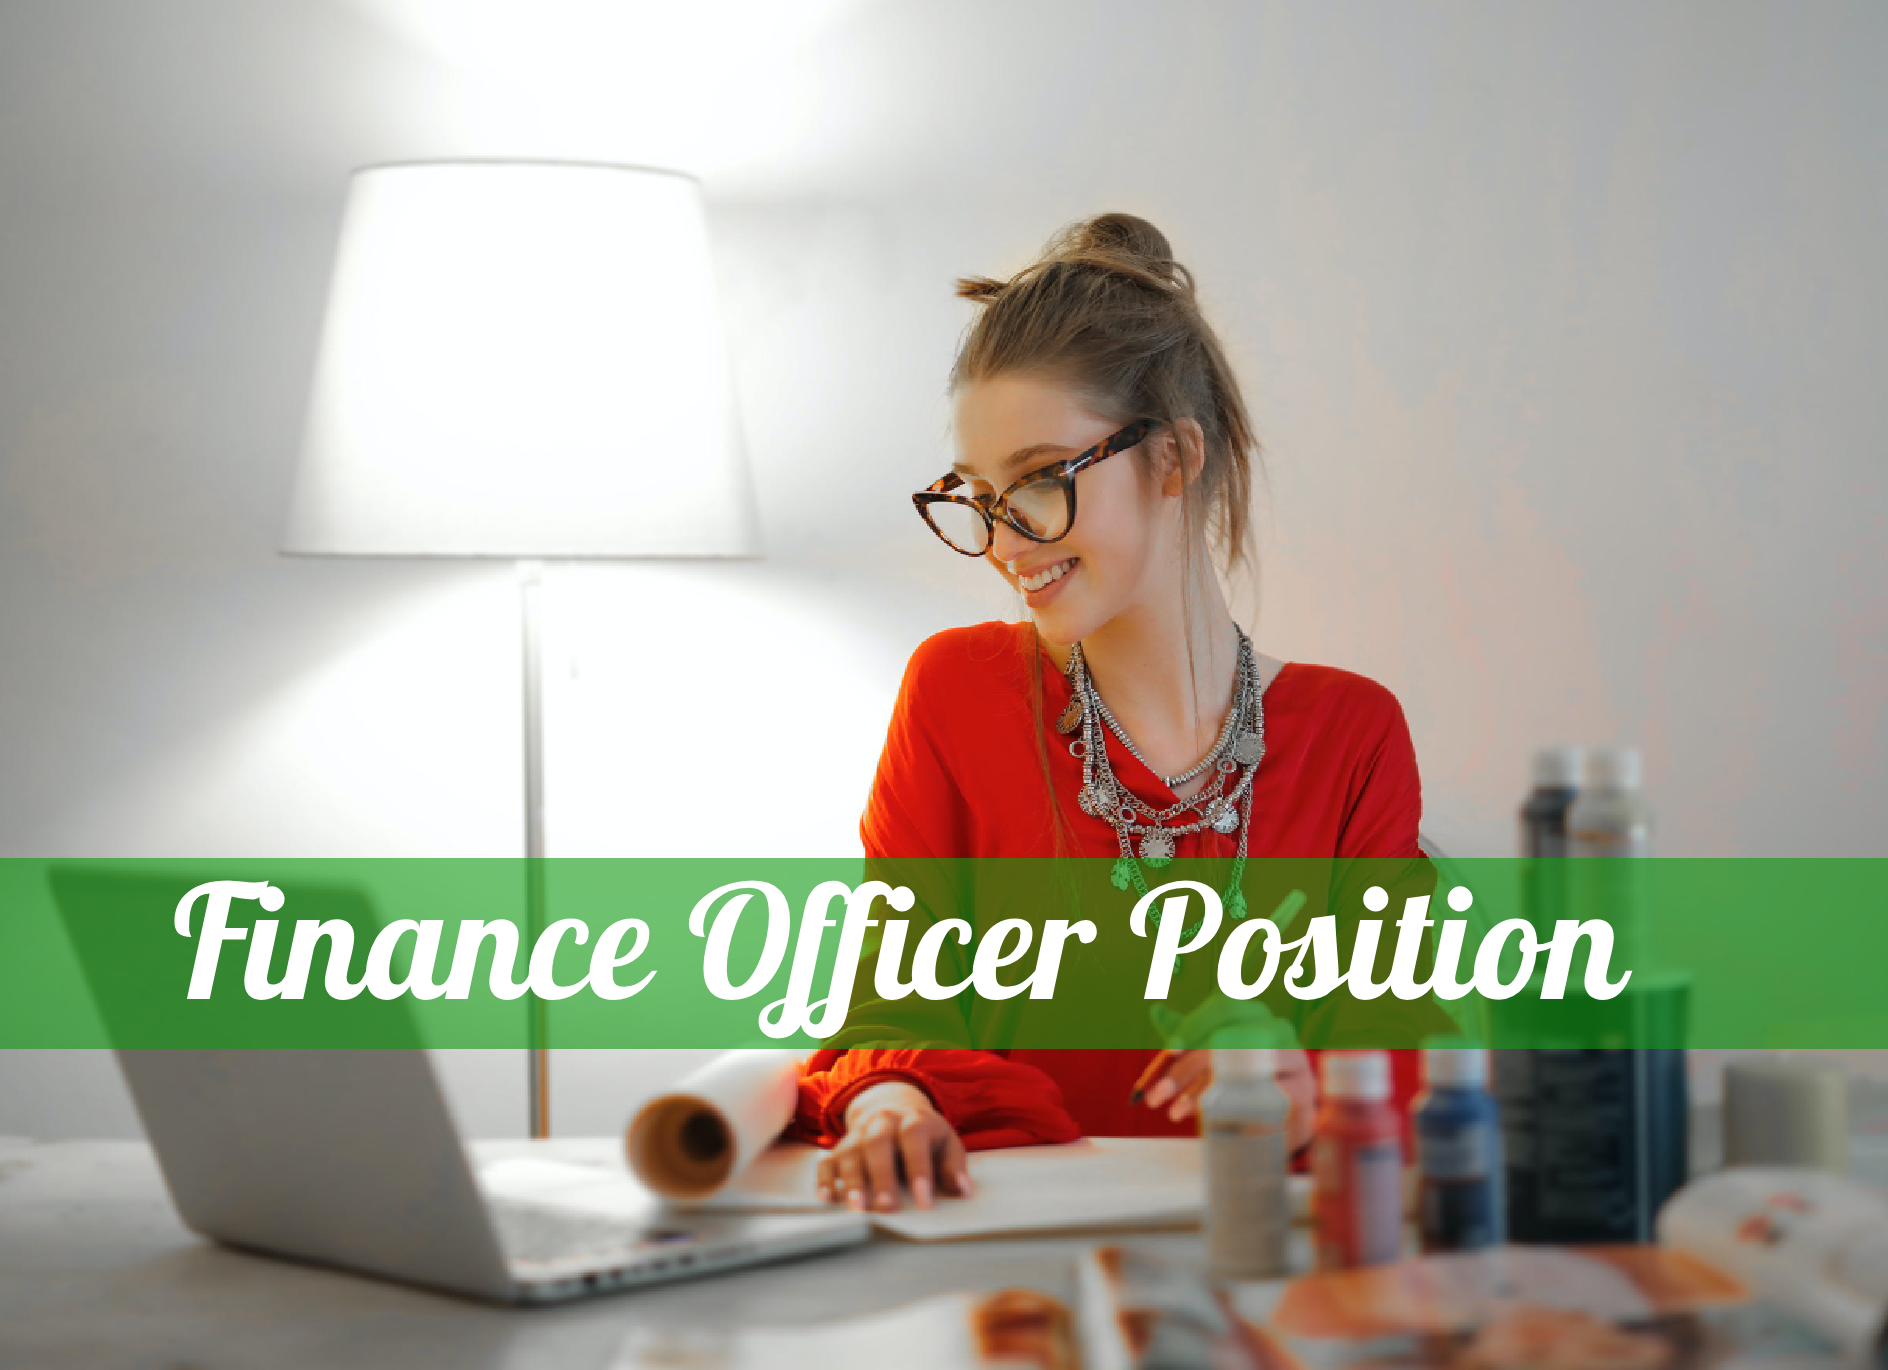 Finance Officer Position